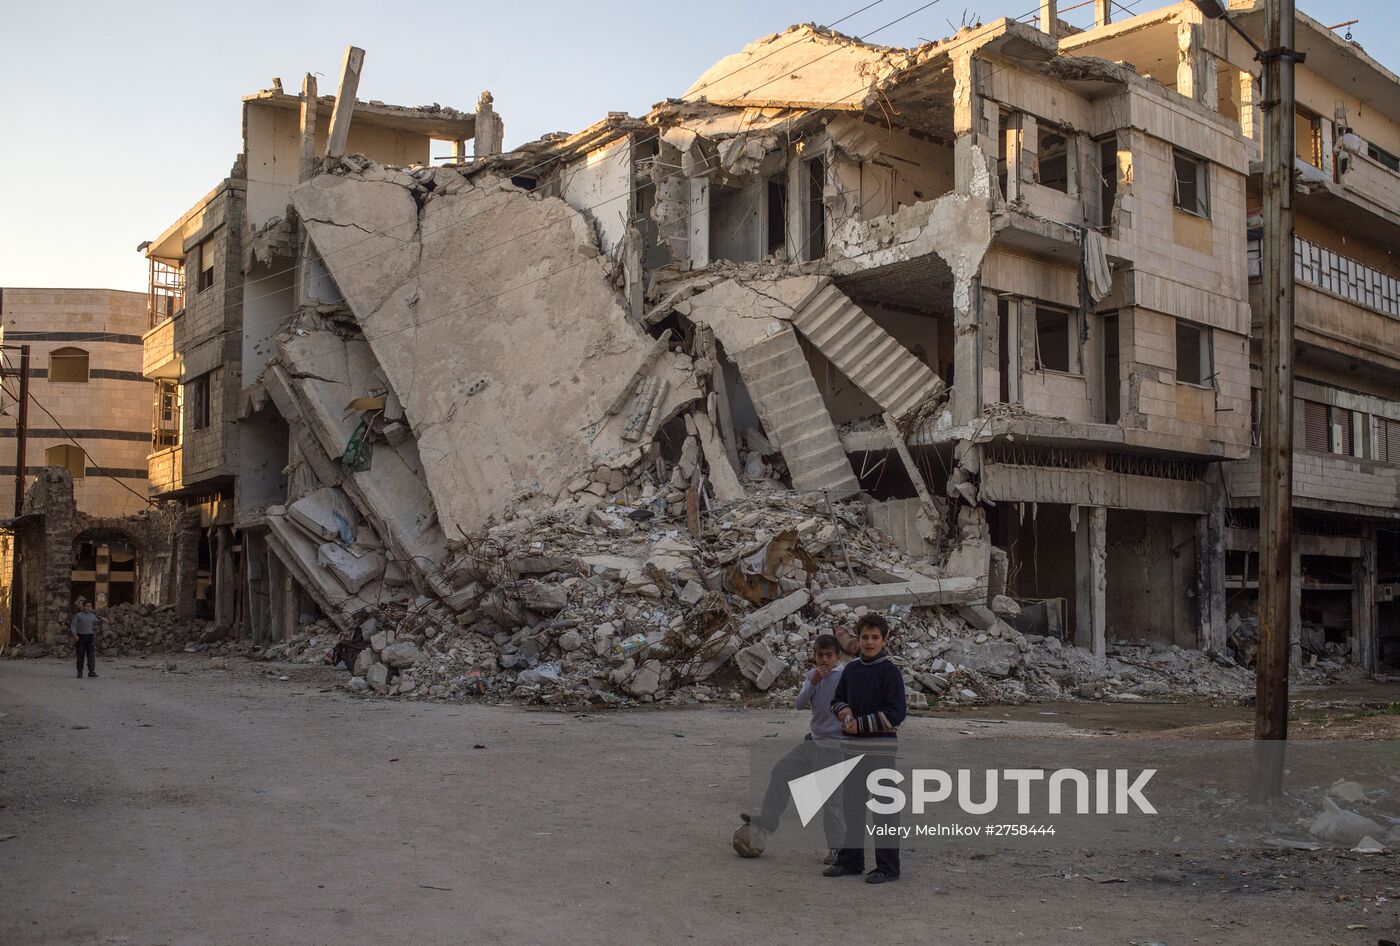 Ruins of Al Hamidiyah district of Homs, Syria